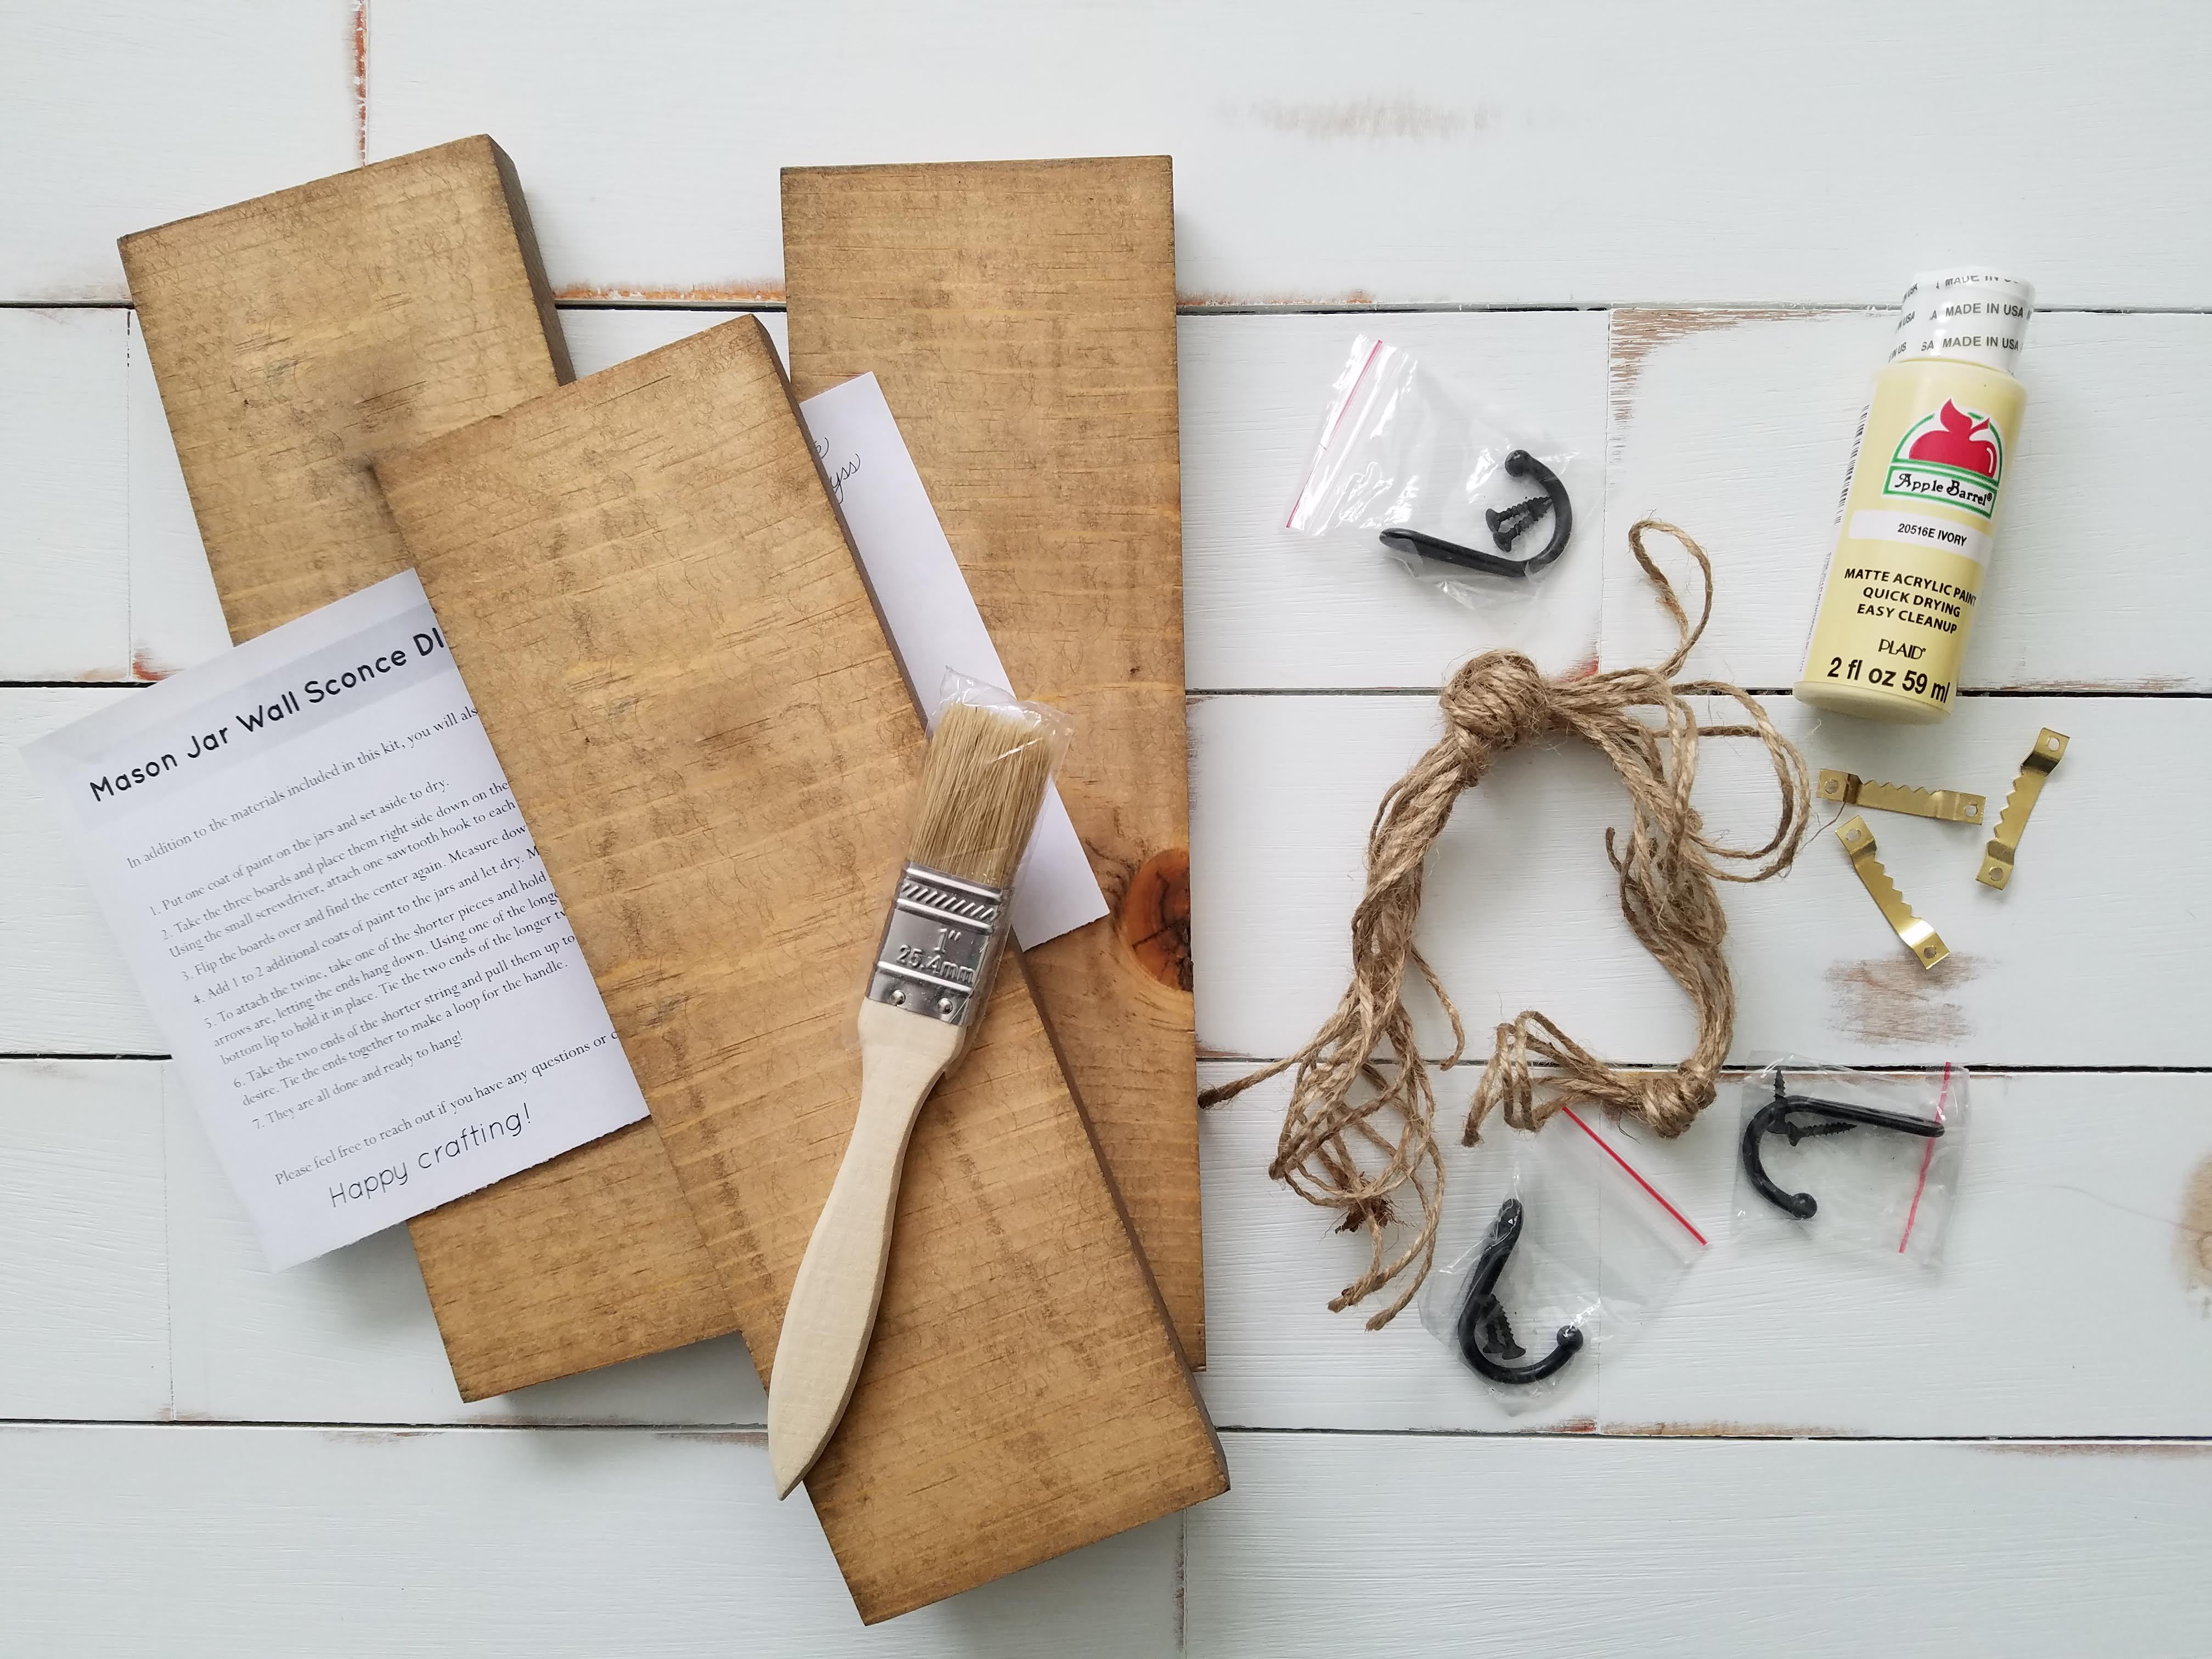 Mason Jar Wall Sconce DIY Kit (Wholesale)